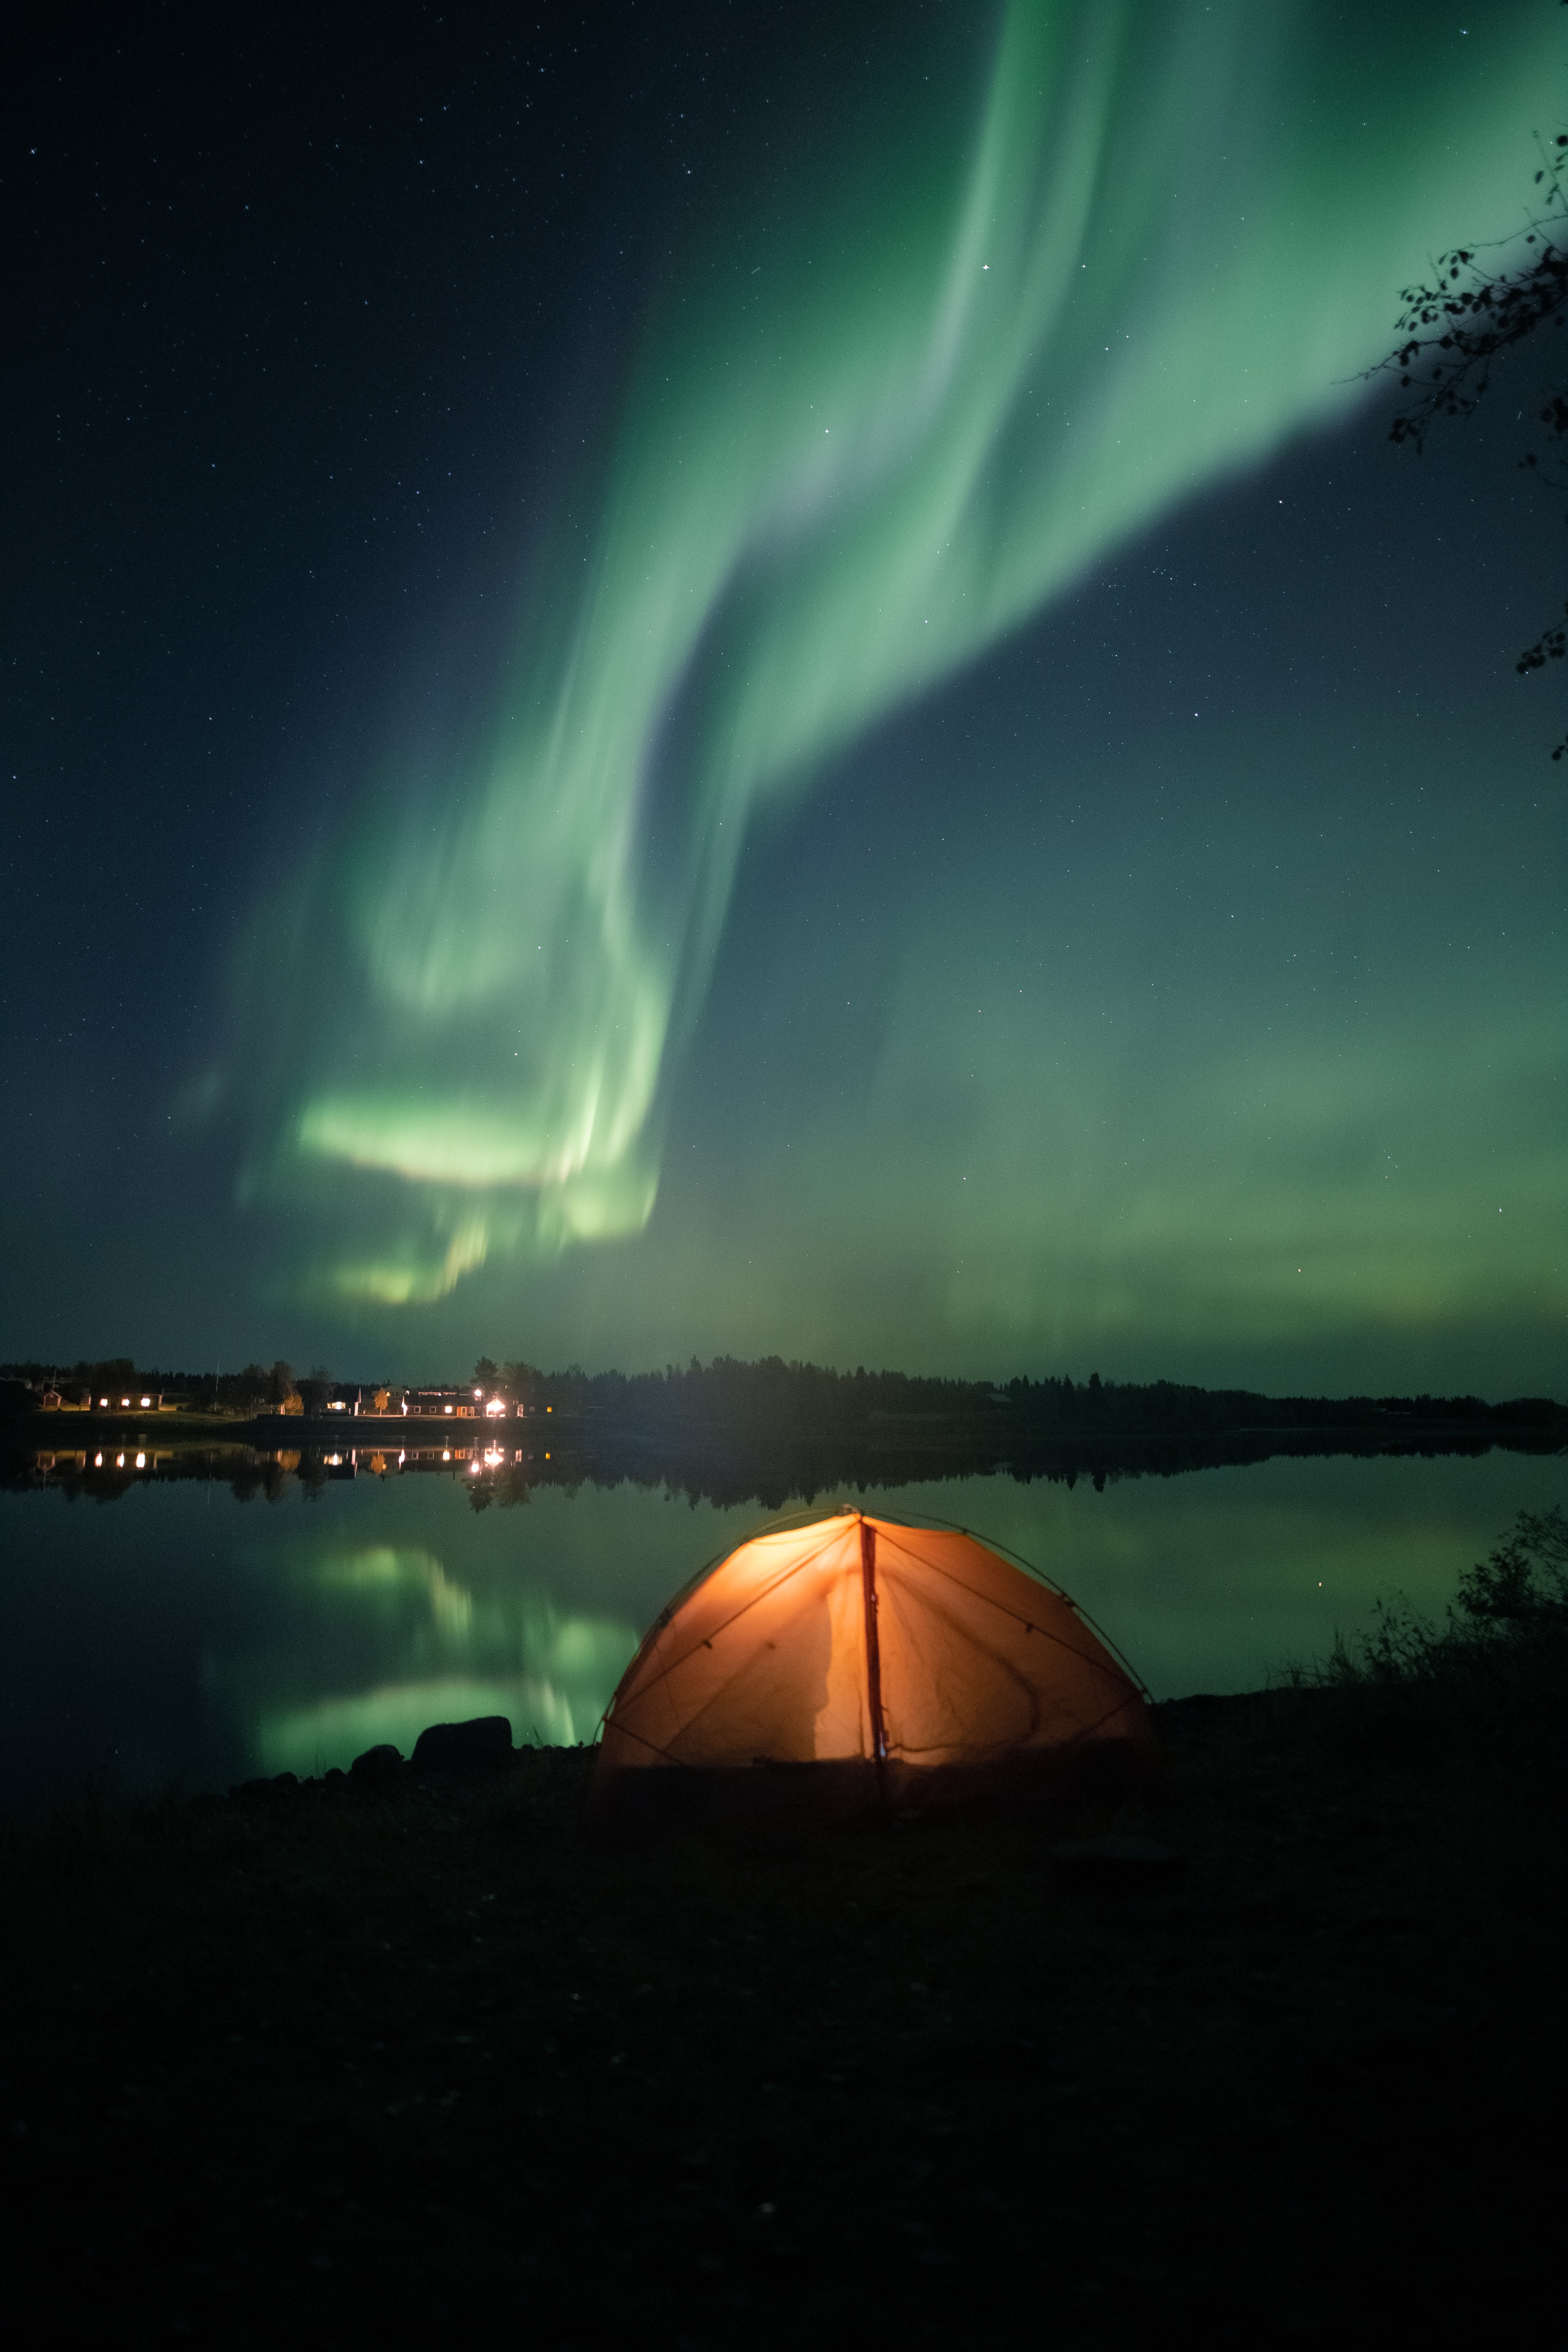 HD photos dark, aurora borealis, camping, campsite